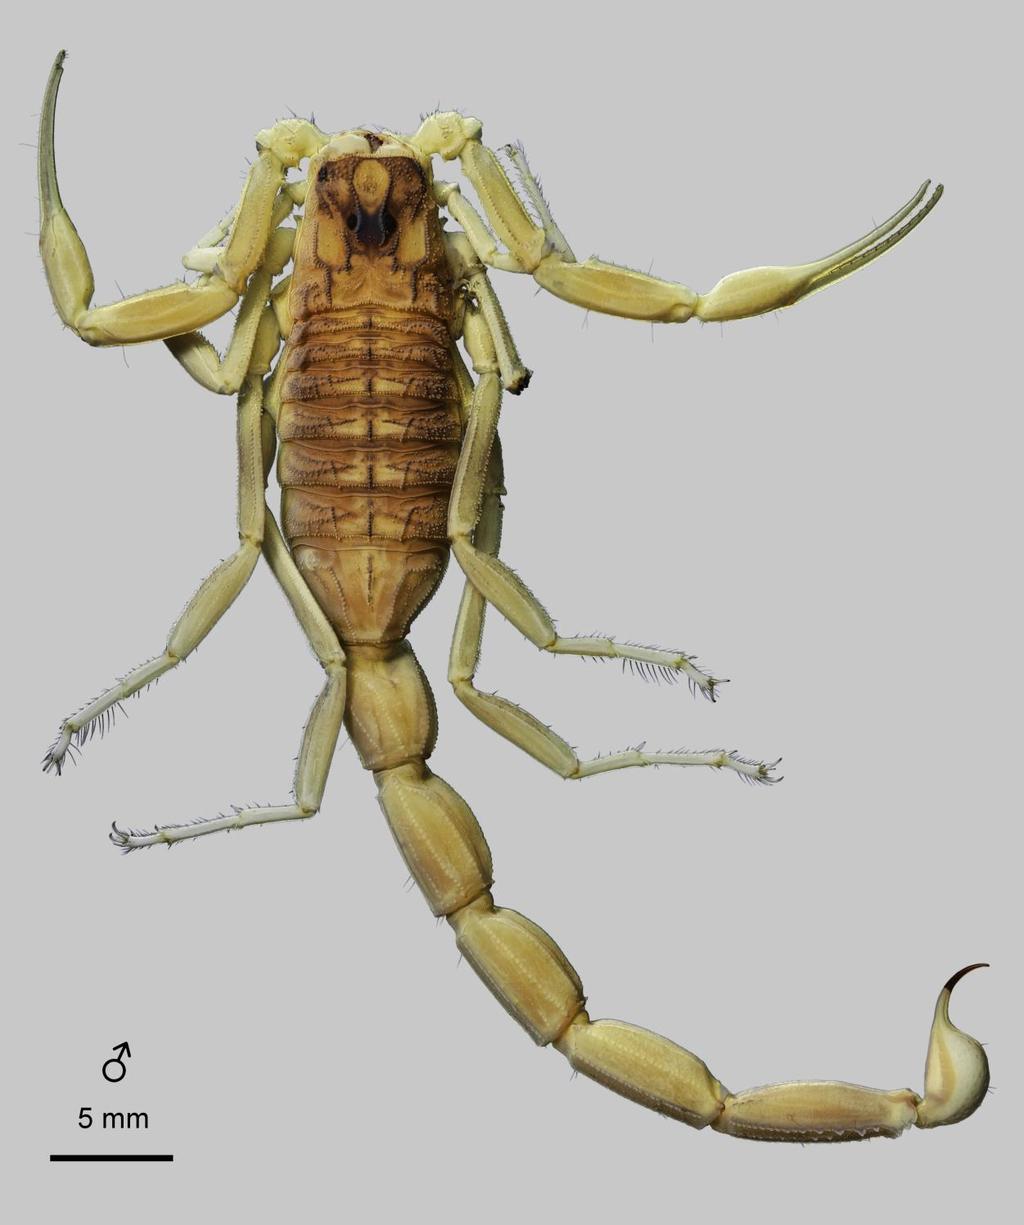 6 Euscorpius 2014, No. 191 Figure 1: Leiurus brachycentrus (Ehrenberg, 1829) stat. n., male. Habitus, dorsal aspect. Ad Darb, Saudi Arabia (NHMB 17ag).